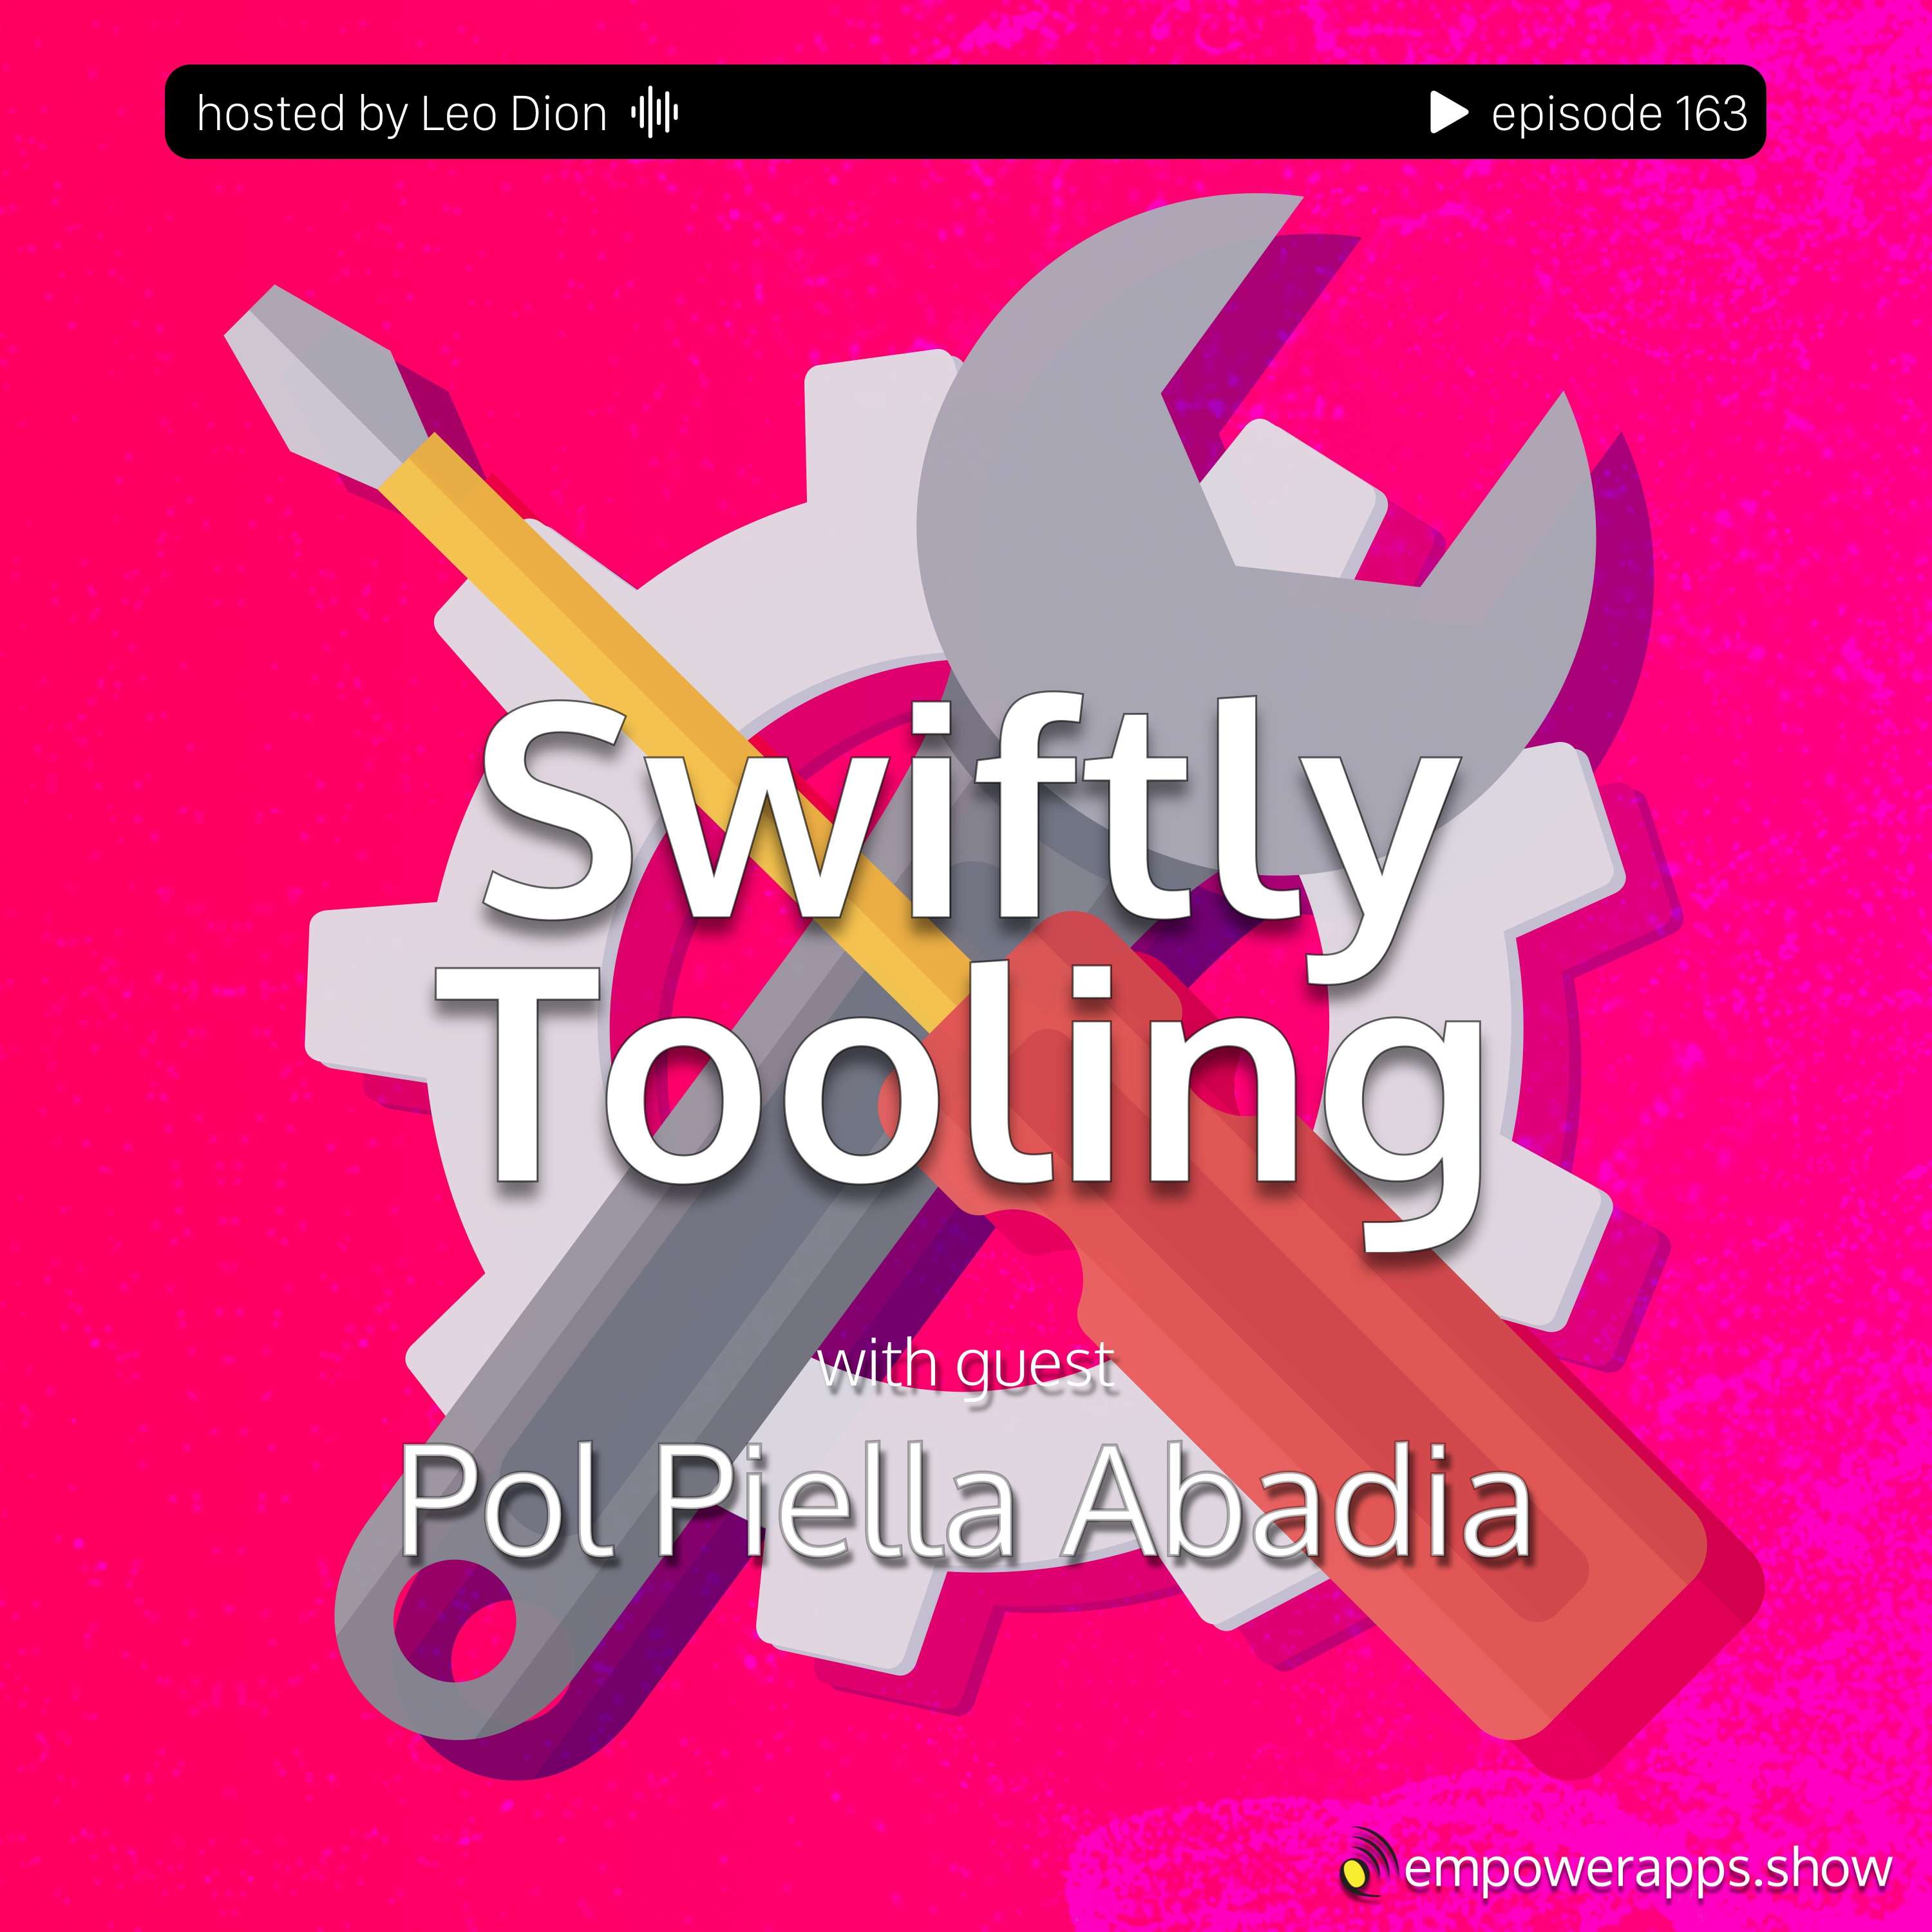 Swiftly Tooling with Pol Piella Abadia